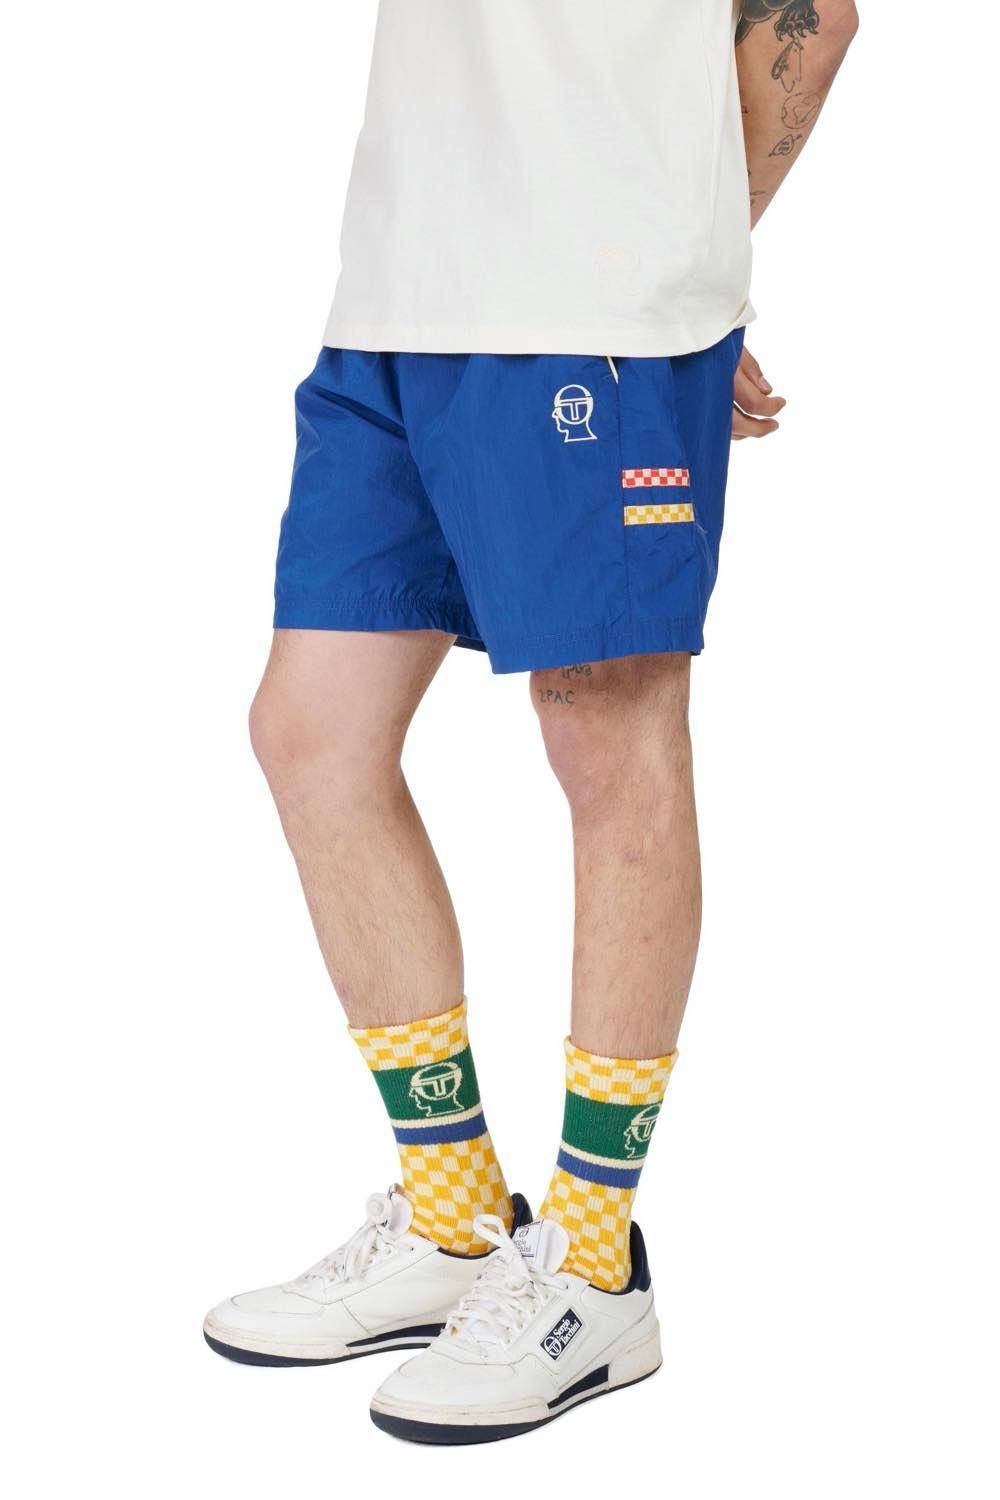 sergio tacchini × braindead shorts -bd navy- 22ss 3月1日発売 ！ - L